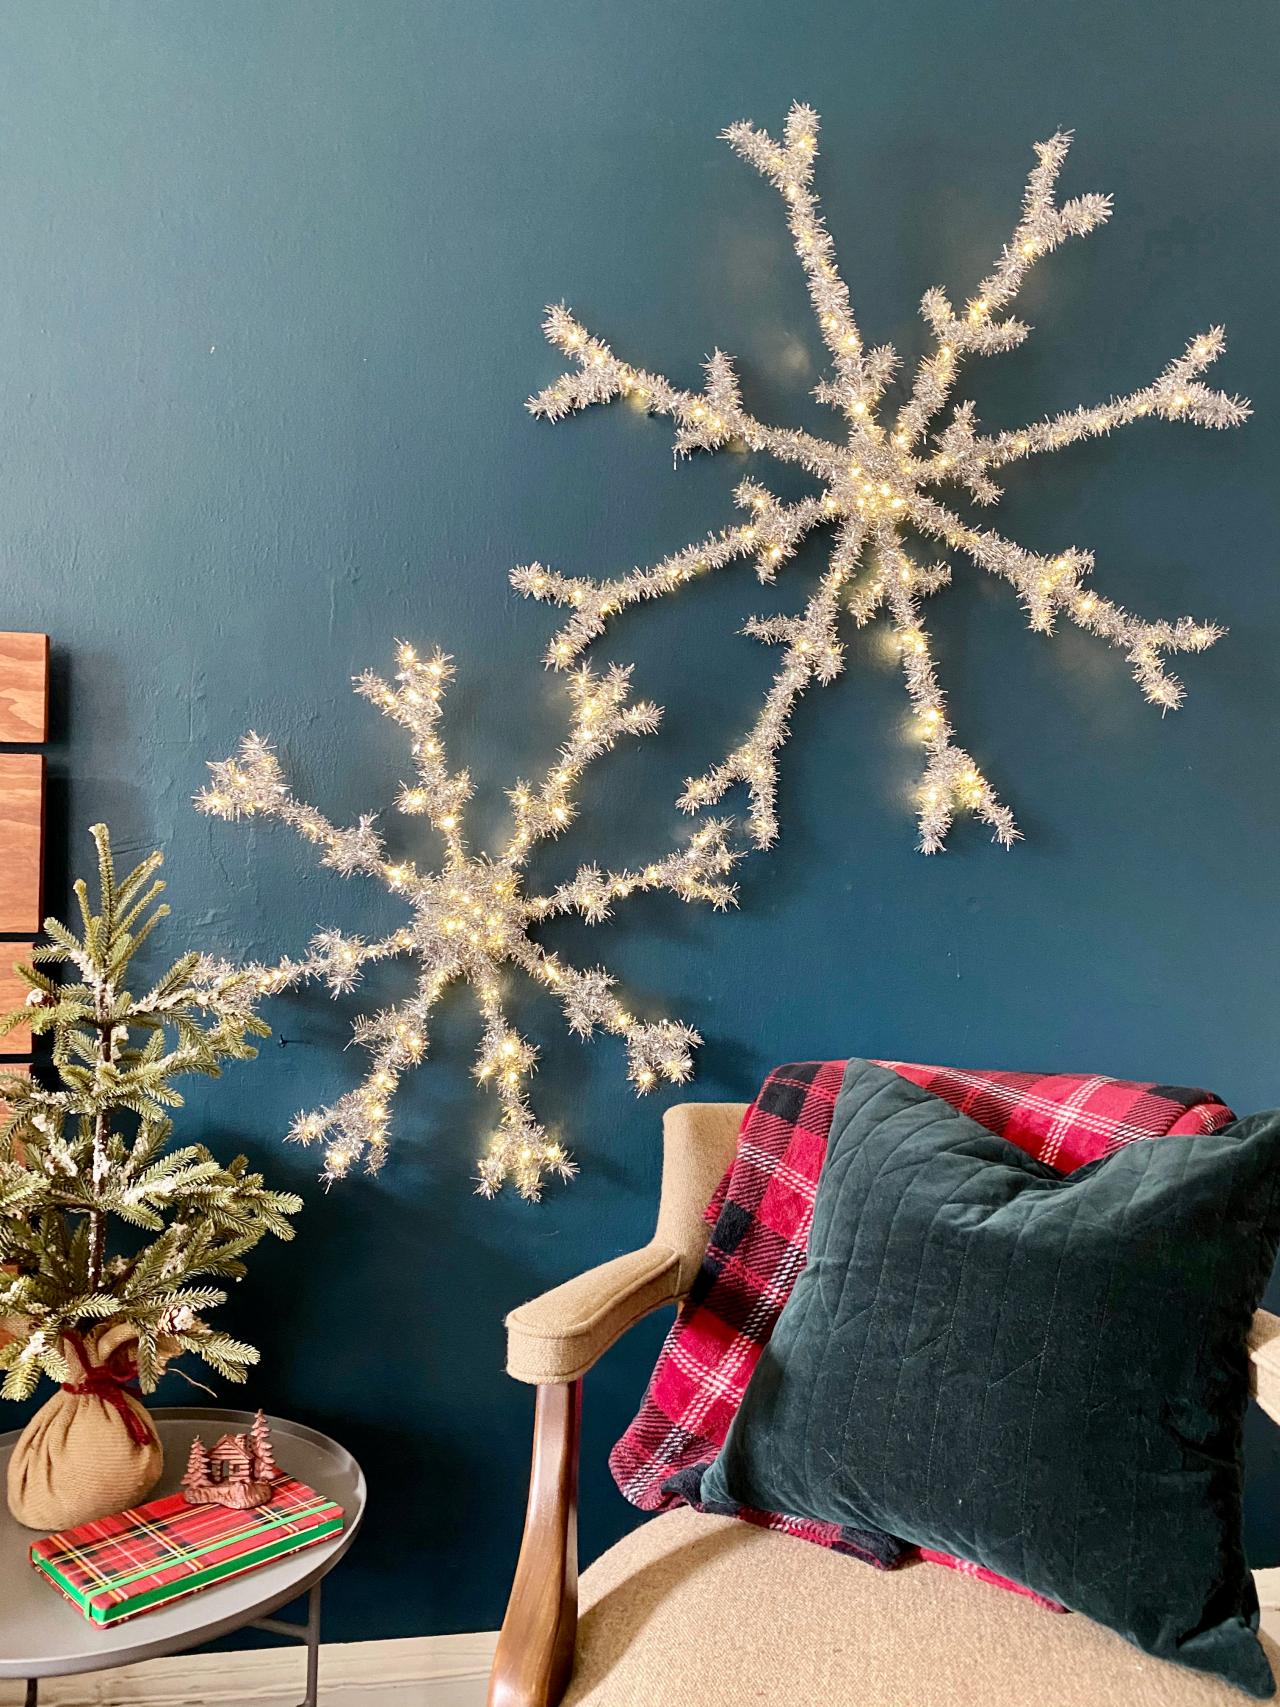 Christmas Snowflake String Lights Battery Operated Xmas Tree winkle Lighting US 